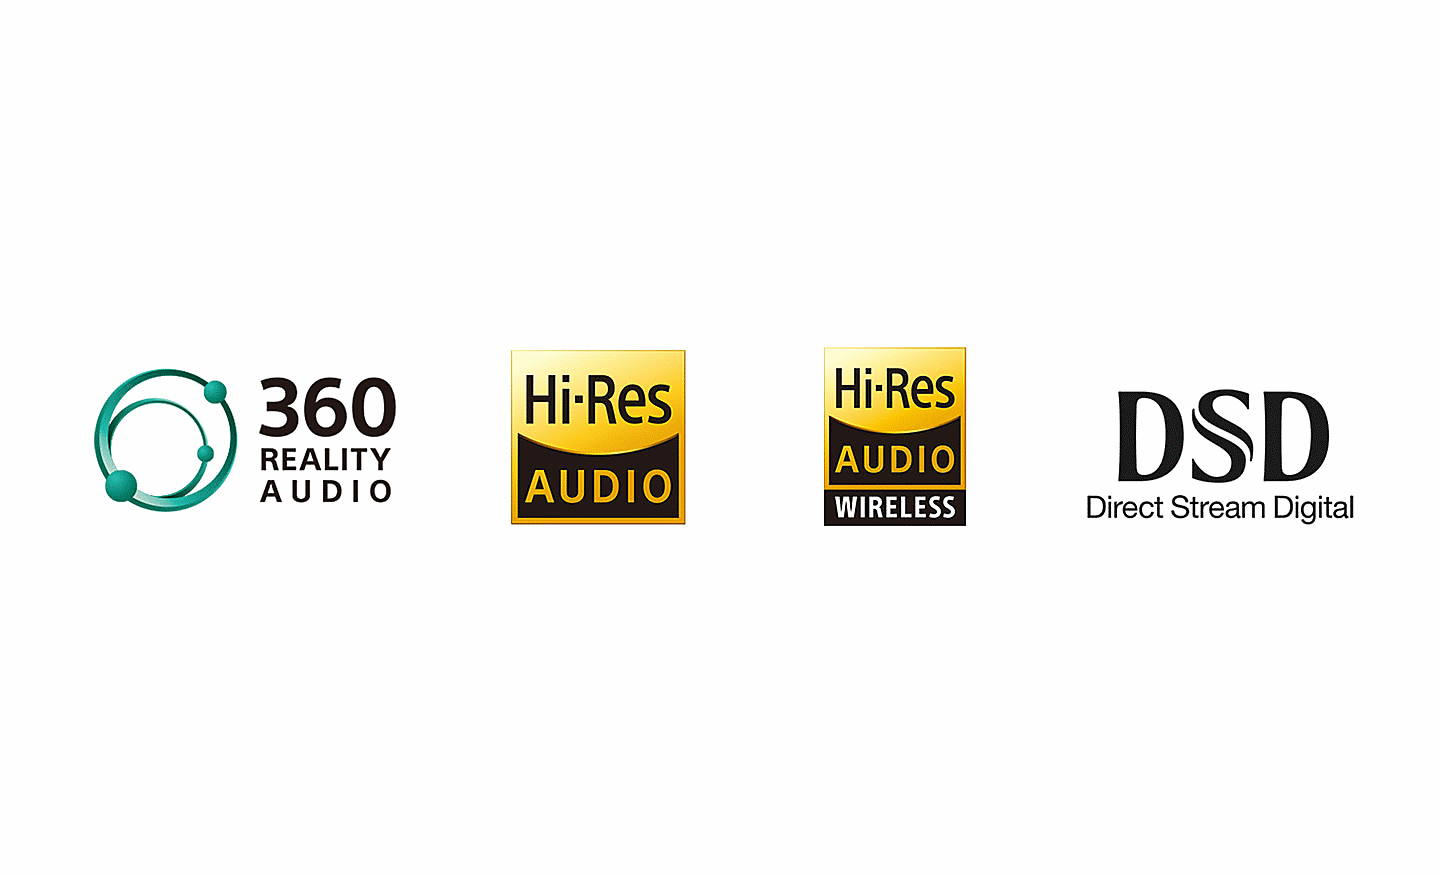 360 Reality Audio-logo, Hi-Res Audio-logo, Hi-Res Audio Wireless-logo, DSD Direct Stream Digital-logo